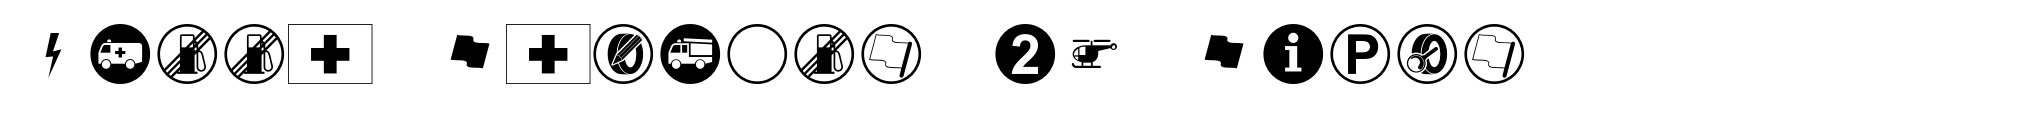 Rally Symbols 2D Signs image